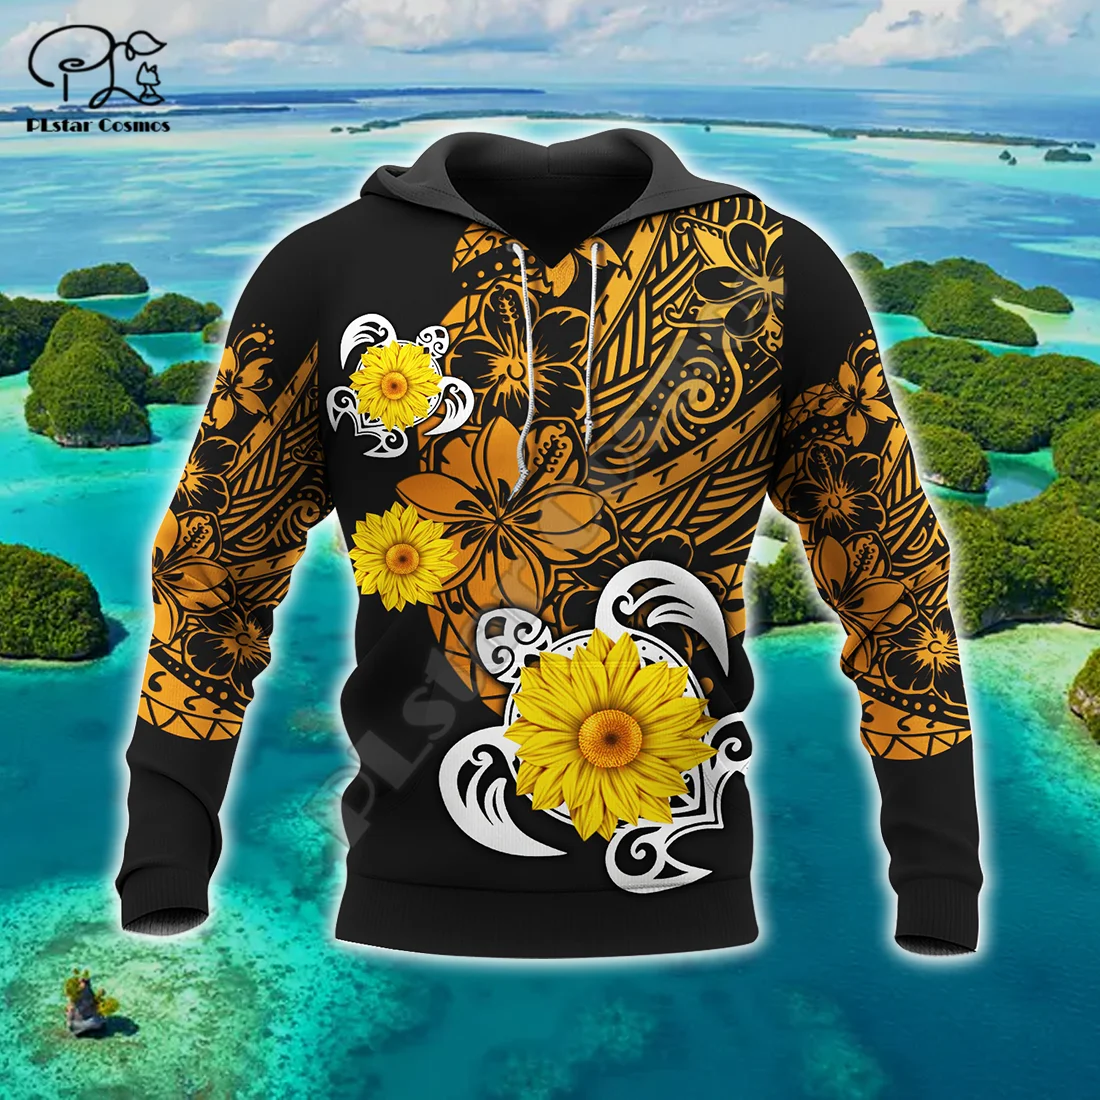 

PLstar Cosmos Fiji National Emblem Culture 3D Printed Fashion Hoodies Sweatshirts Zip Hooded For Men/Women Casual Streetwear F02